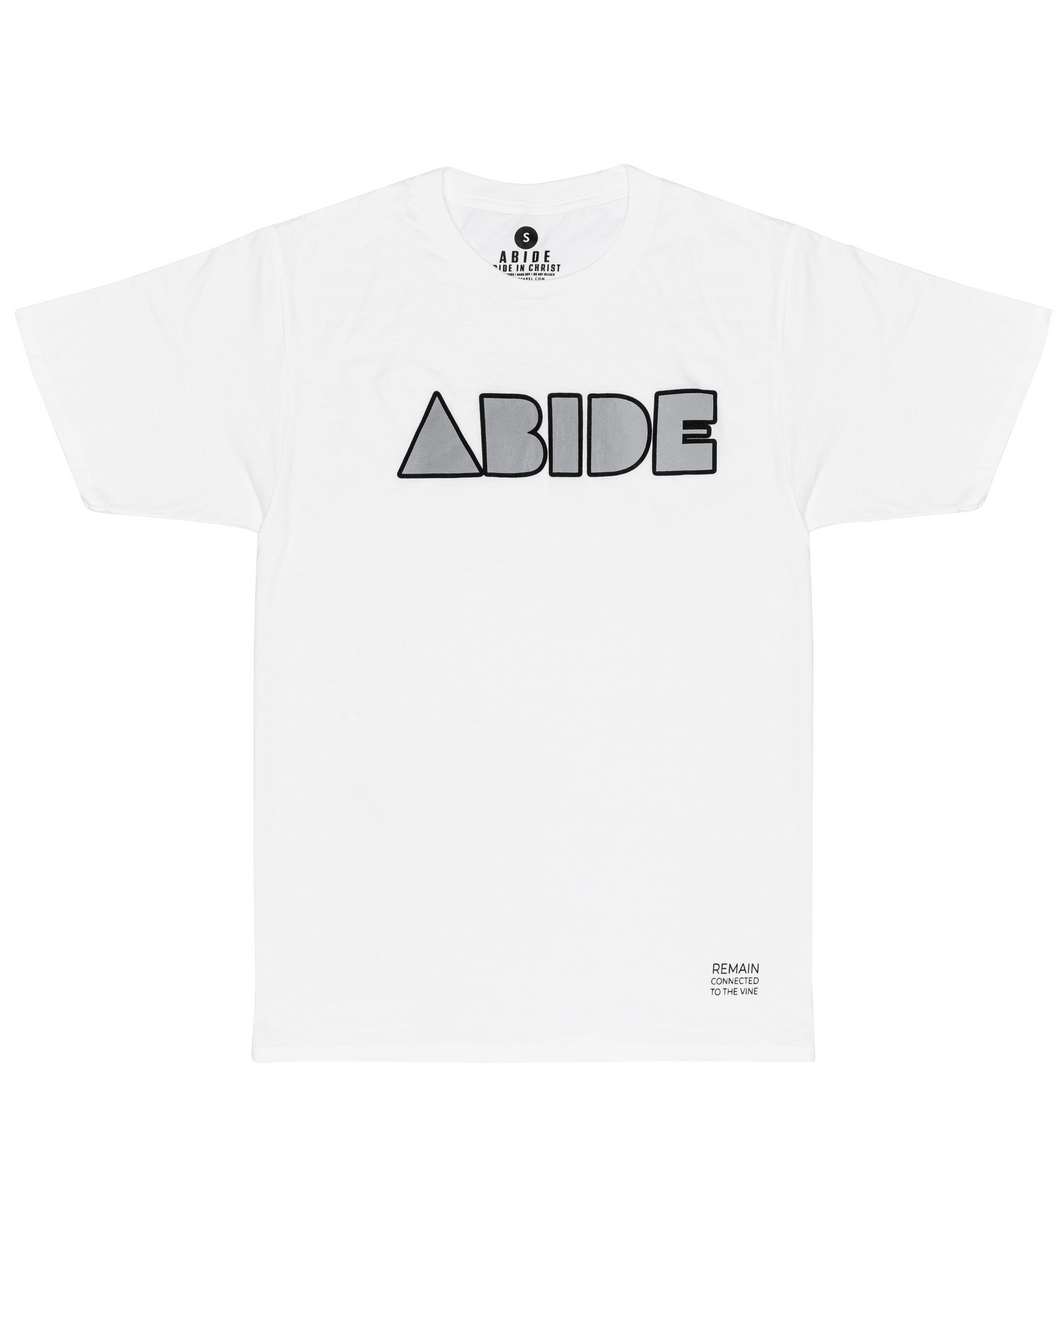 ABIDE Short Sleeve - White/Grey Shape Font Tee